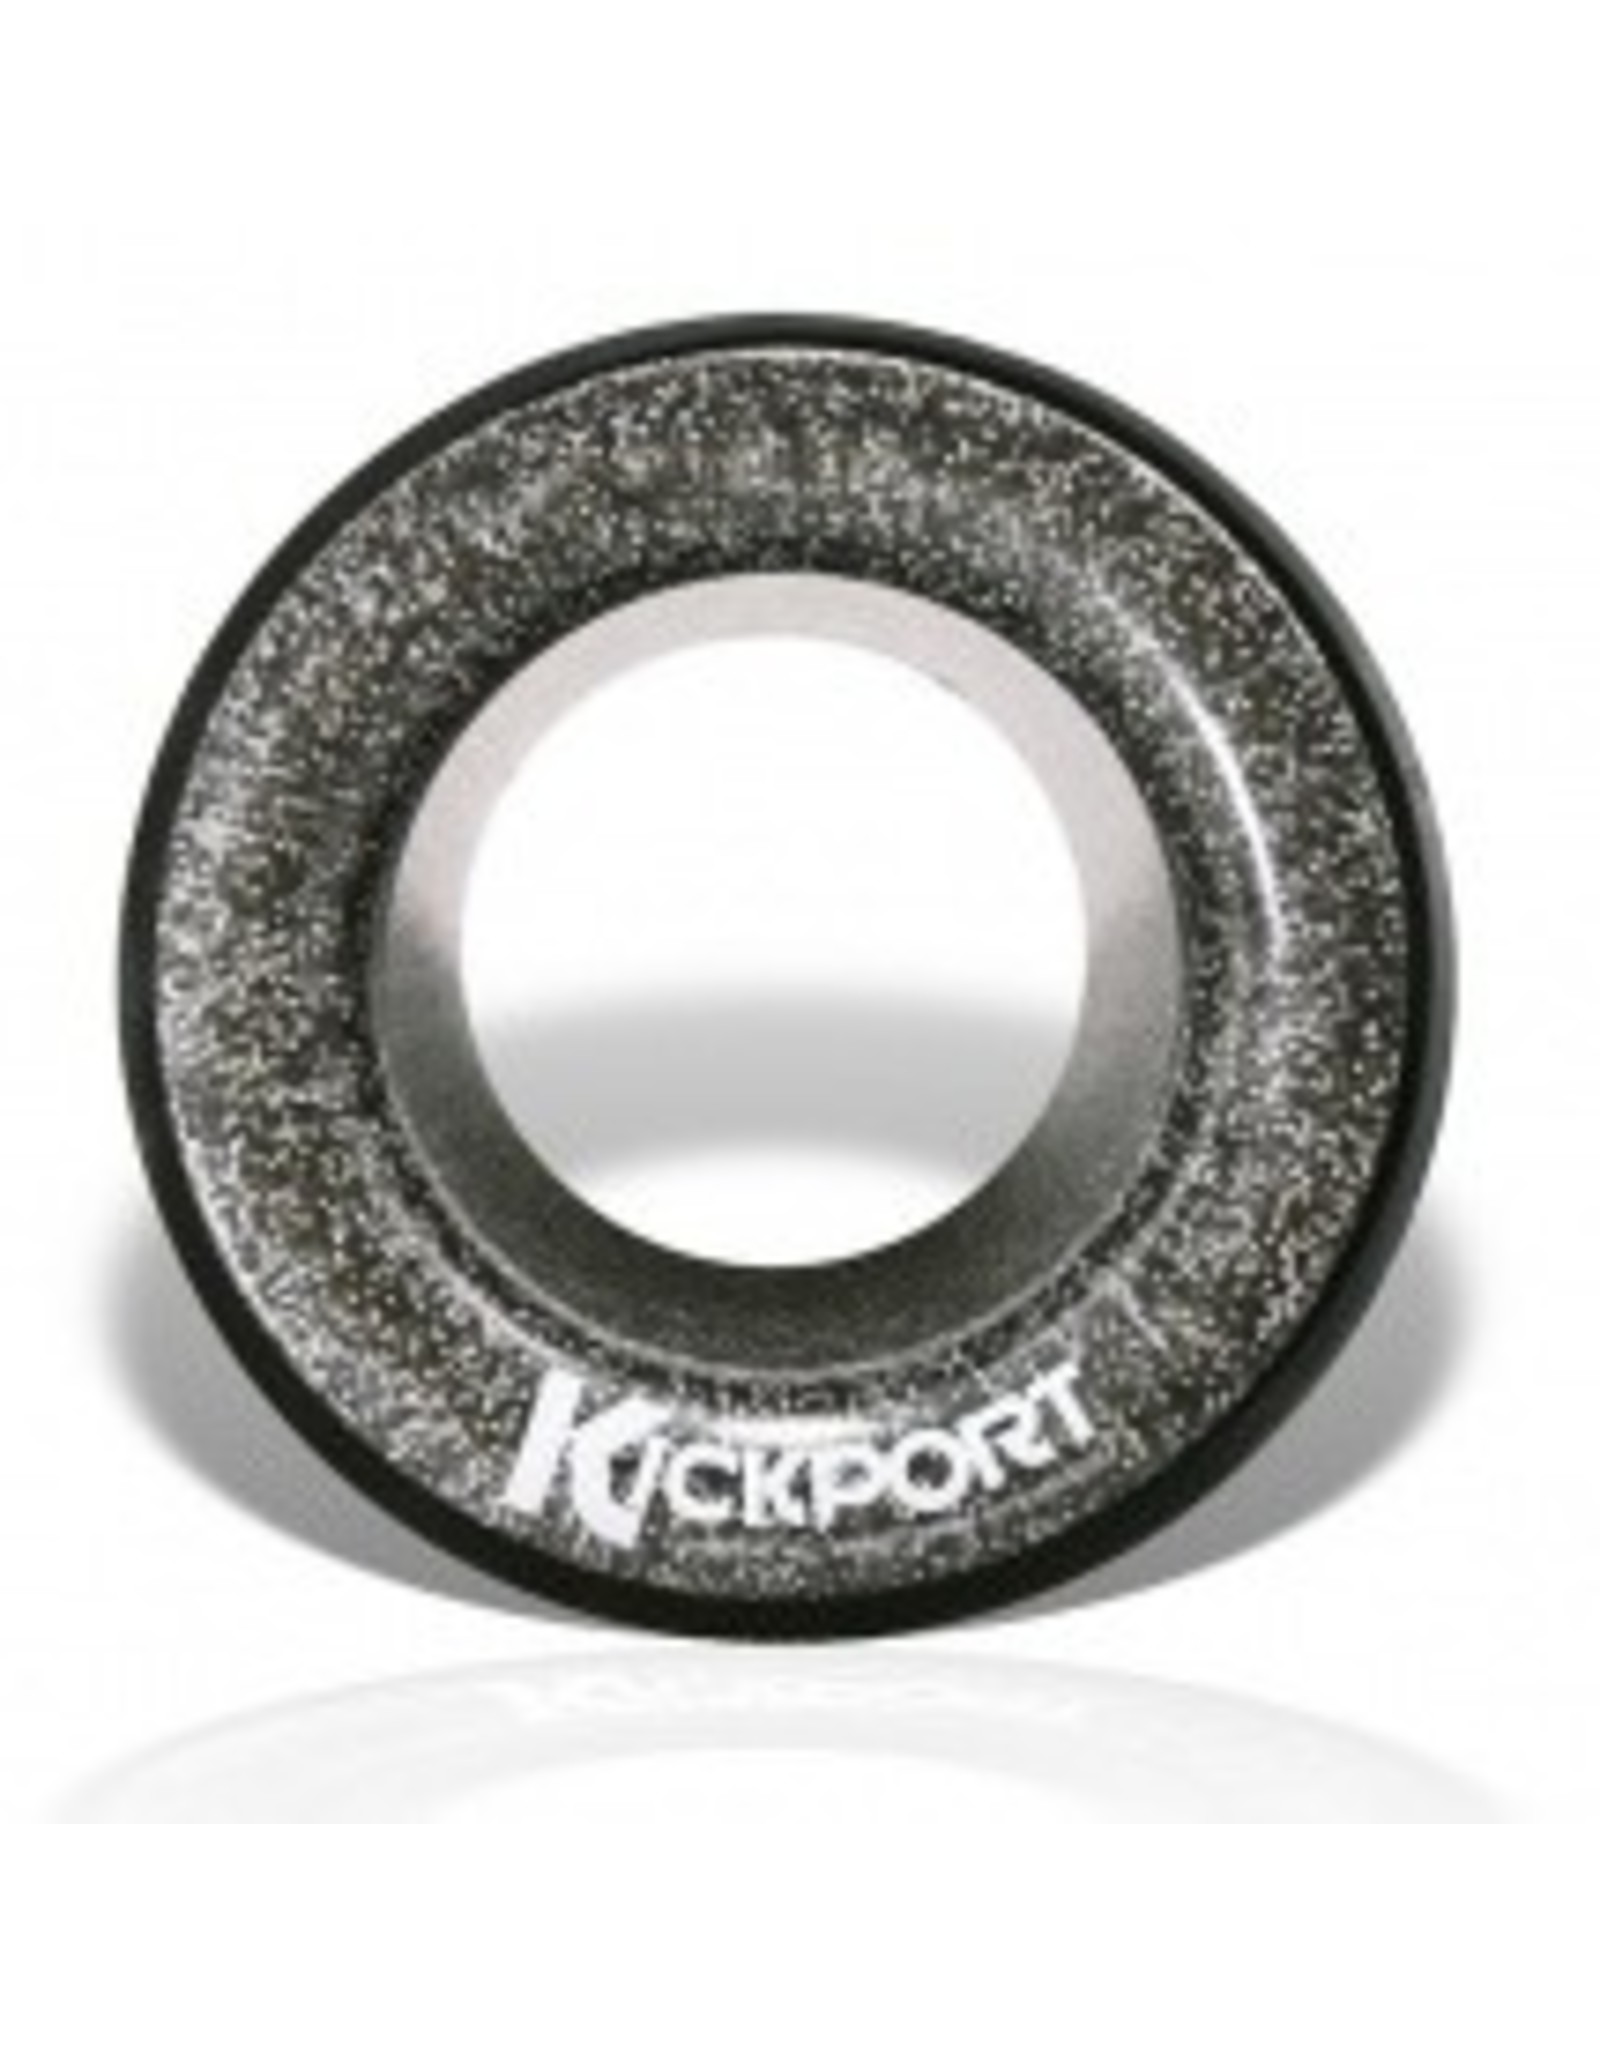 Kickport  KP2_SS SILVER SAND damping control bass booster